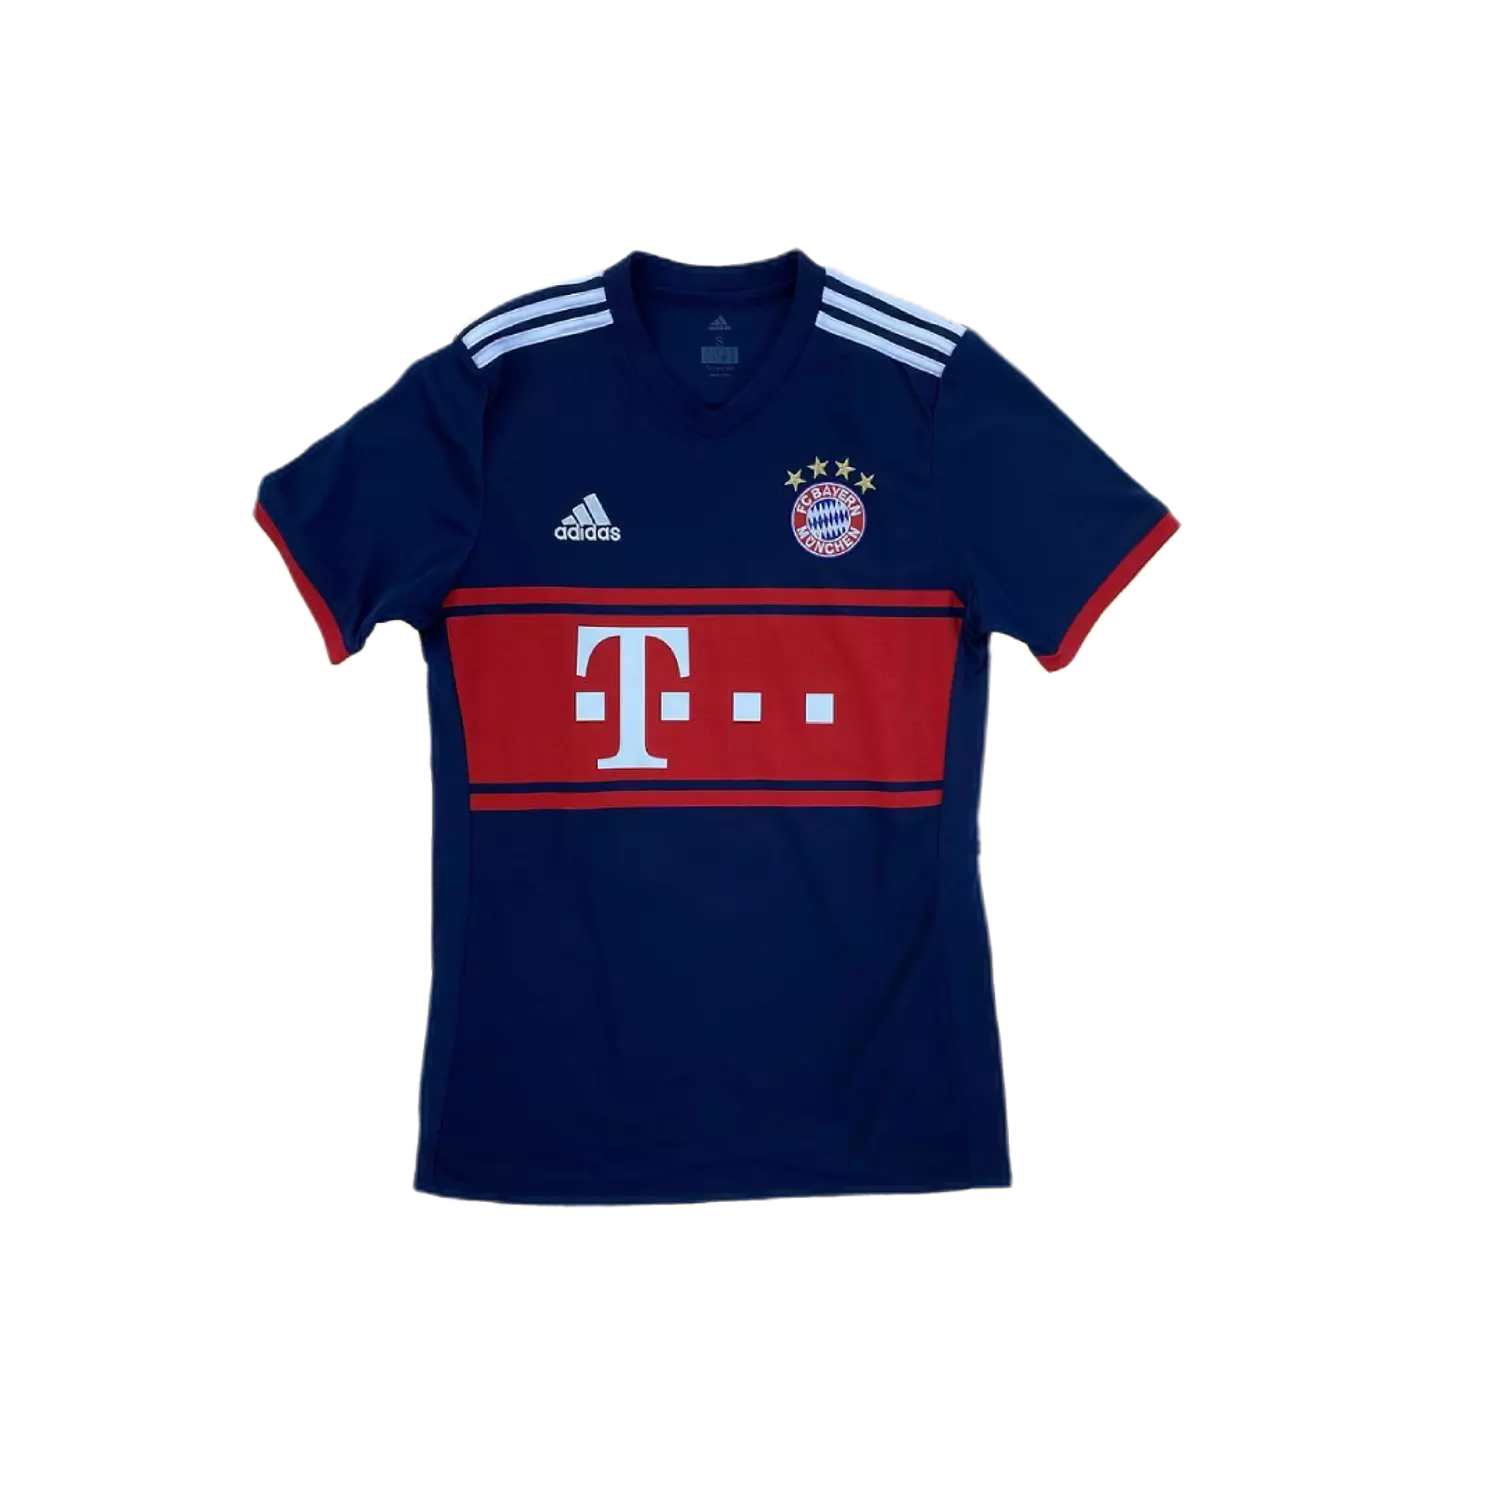 Bayern Munich 2017/18 Away Kit (S) 0